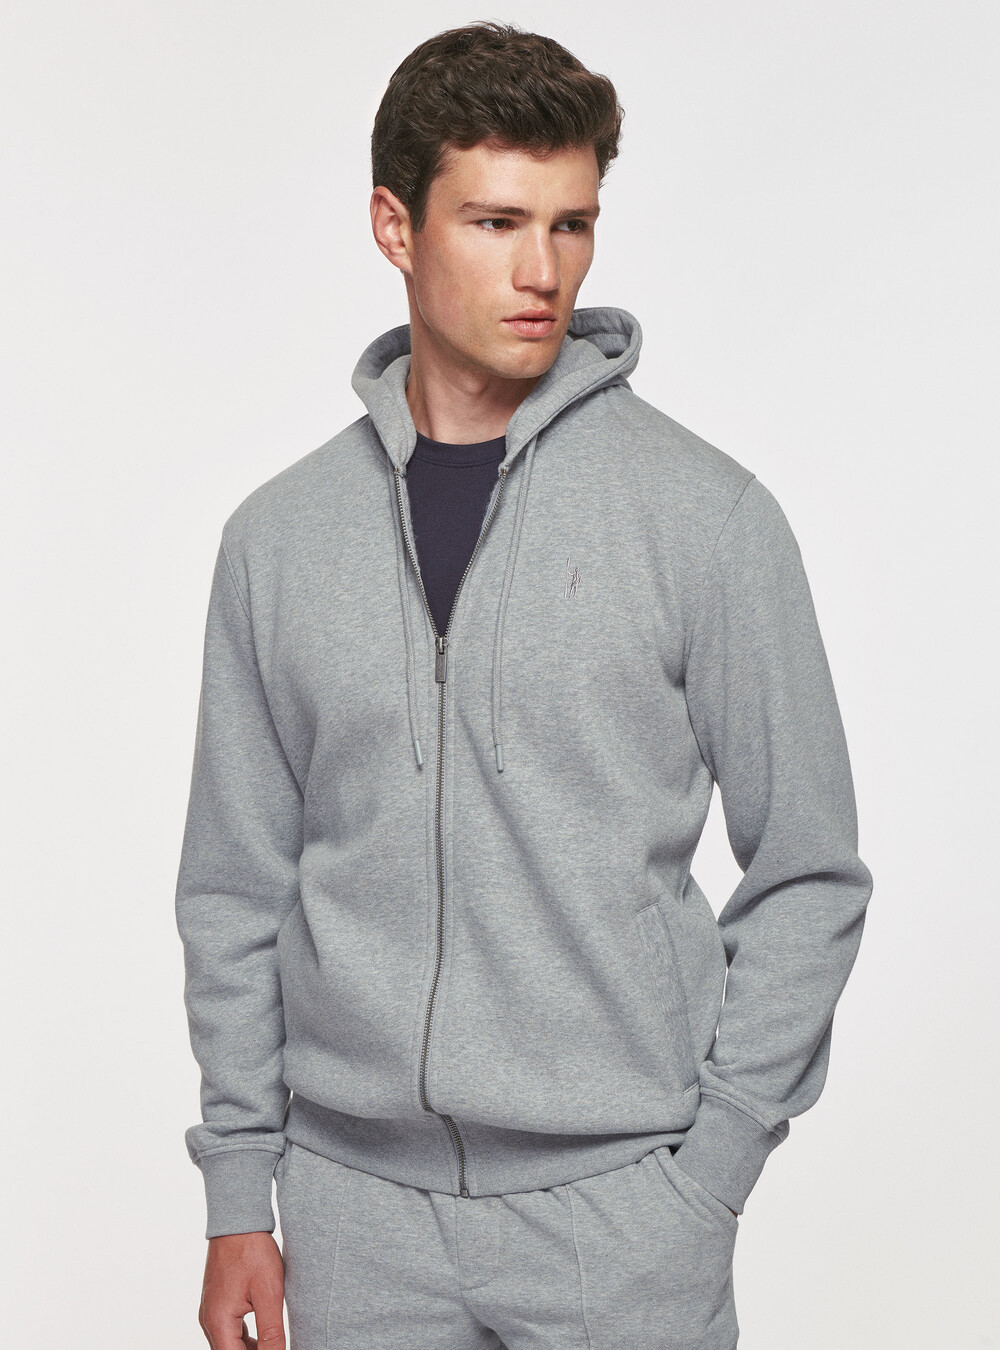 Hooded sweatshirt cardigan | GutteridgeUS | New In Uomo